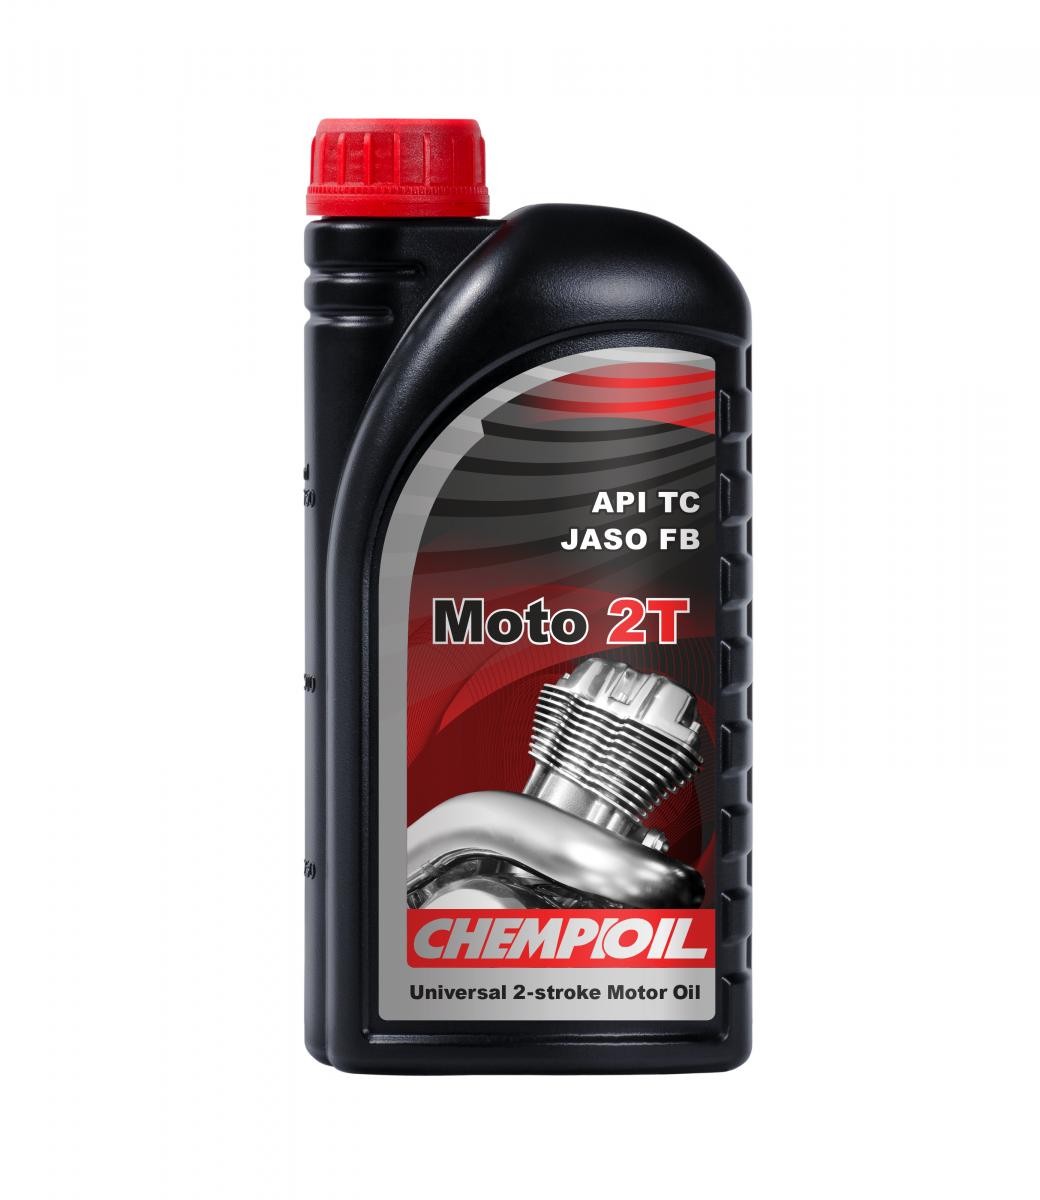 CHEMPIOIL MOTO, 2T 1l Motor oil CH9201-1 buy